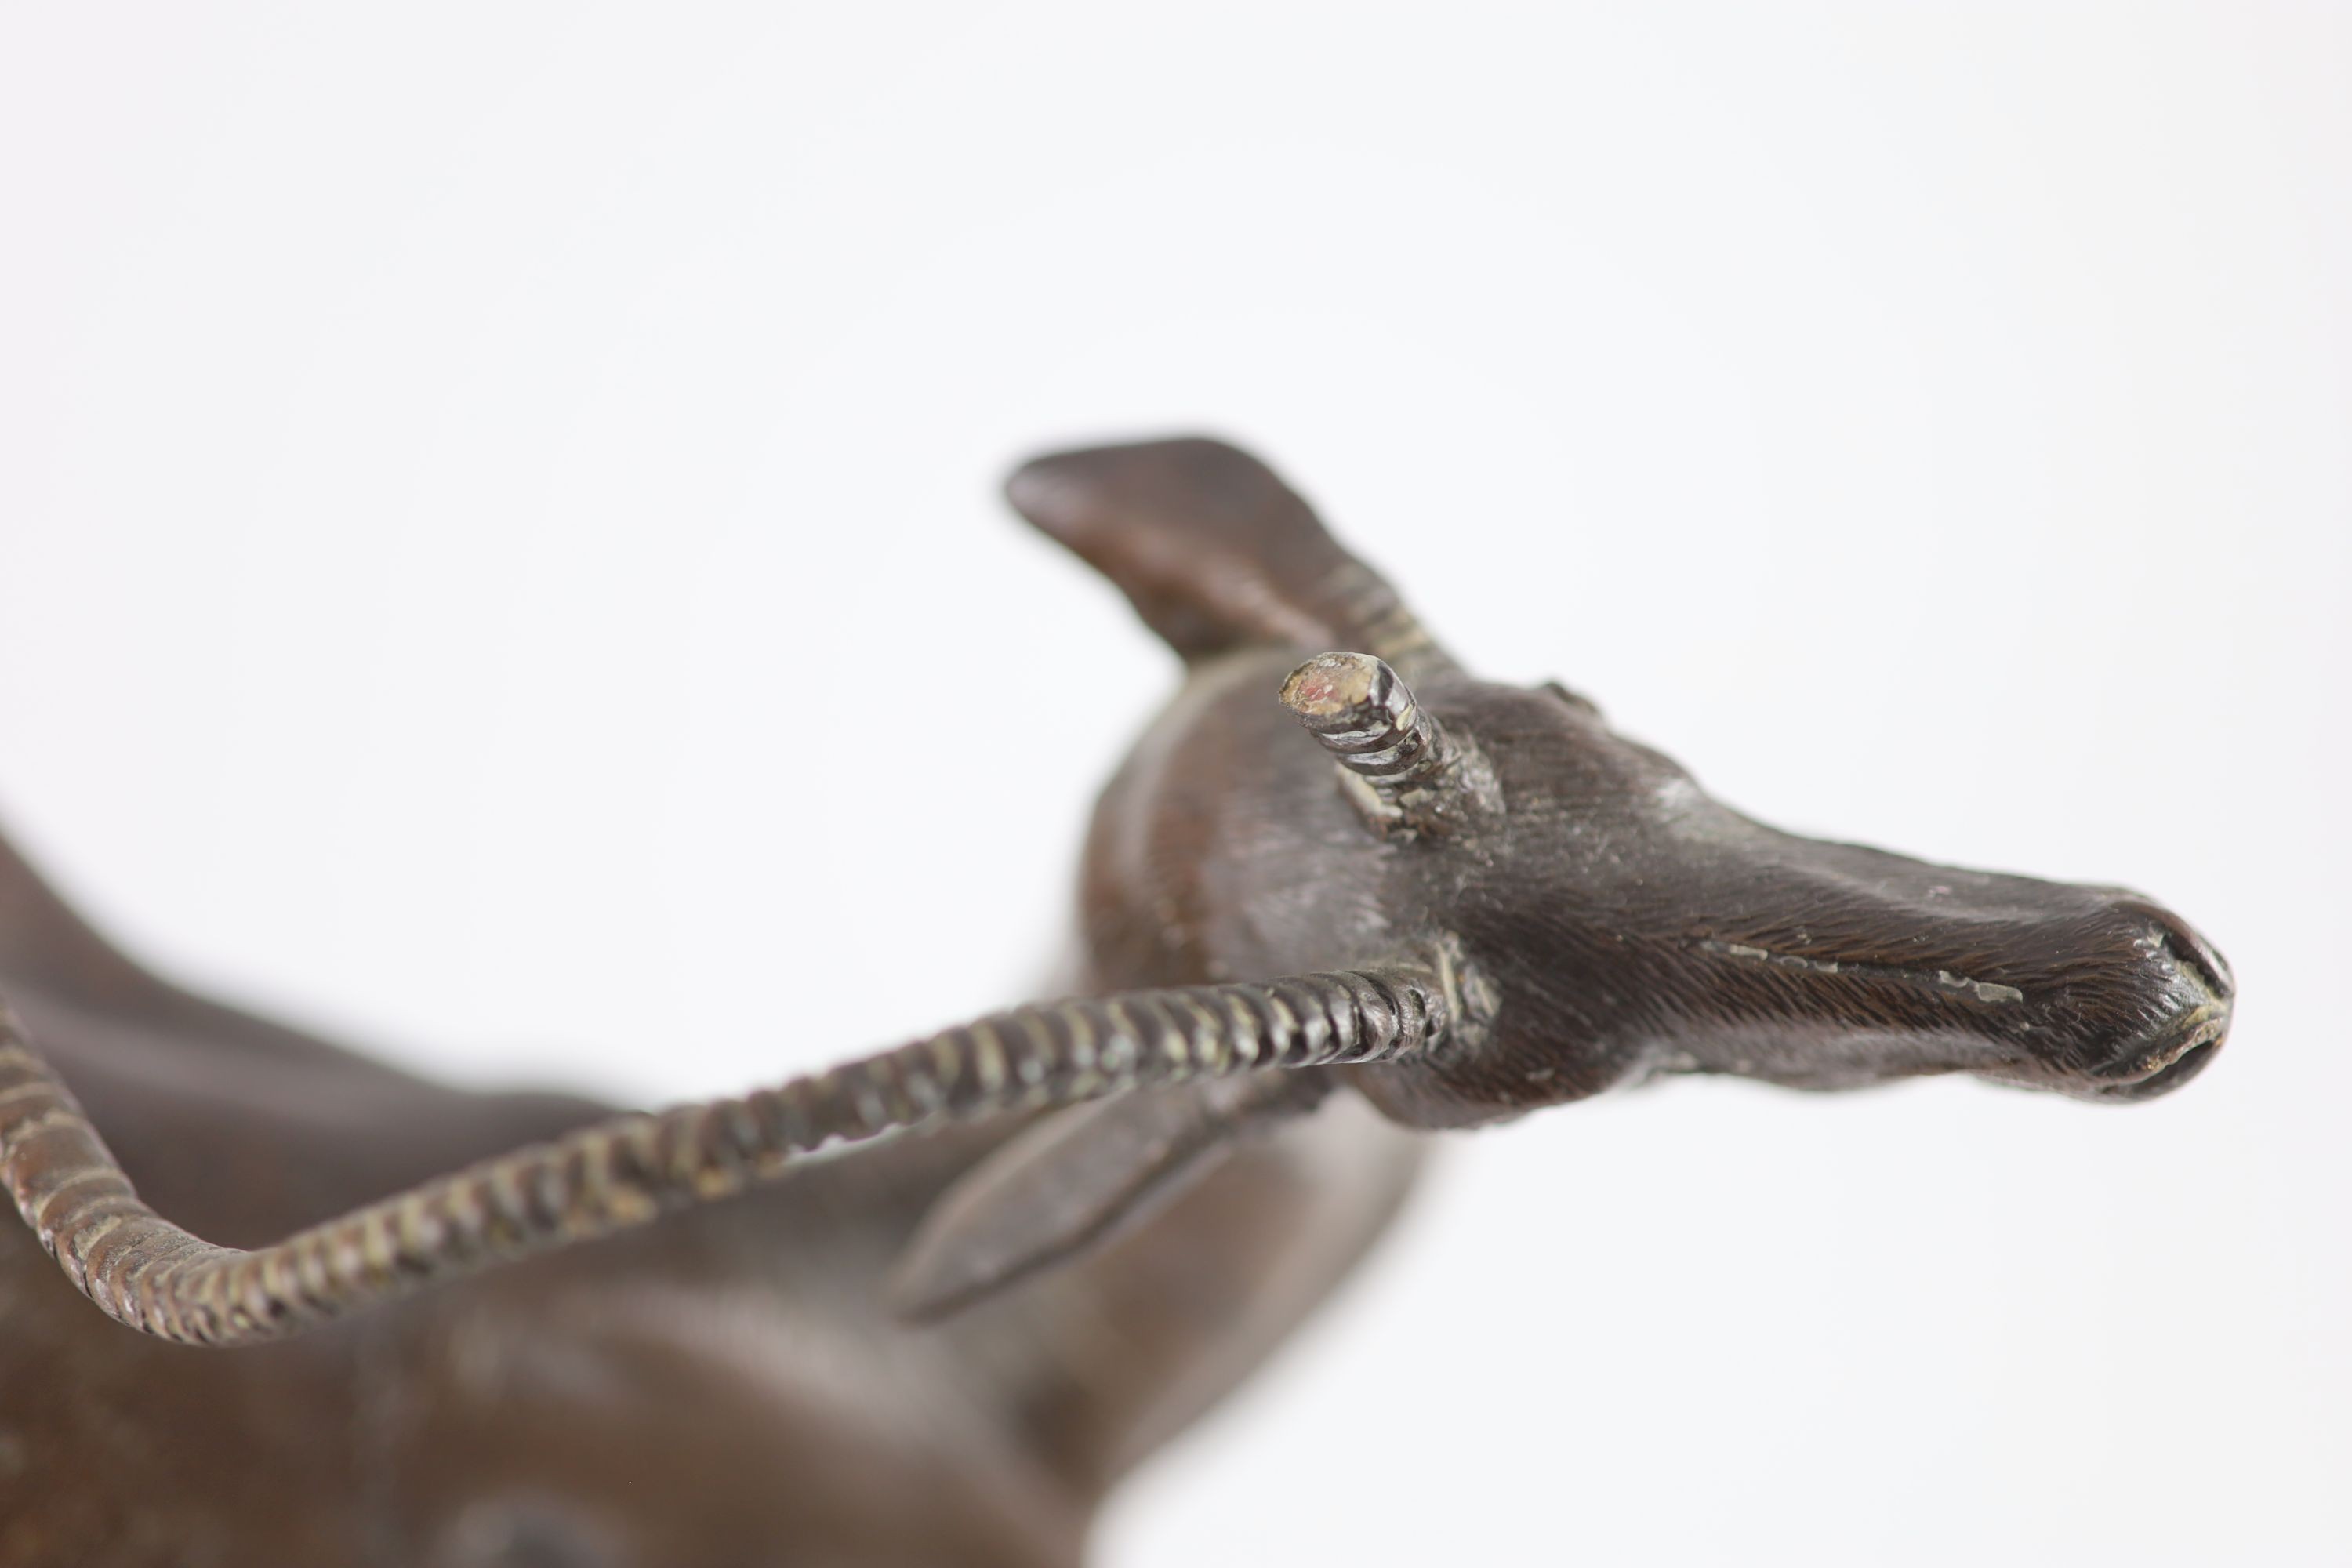 Tim Nicklin. A bronze model of a bucking impala width 32cm height 35cm